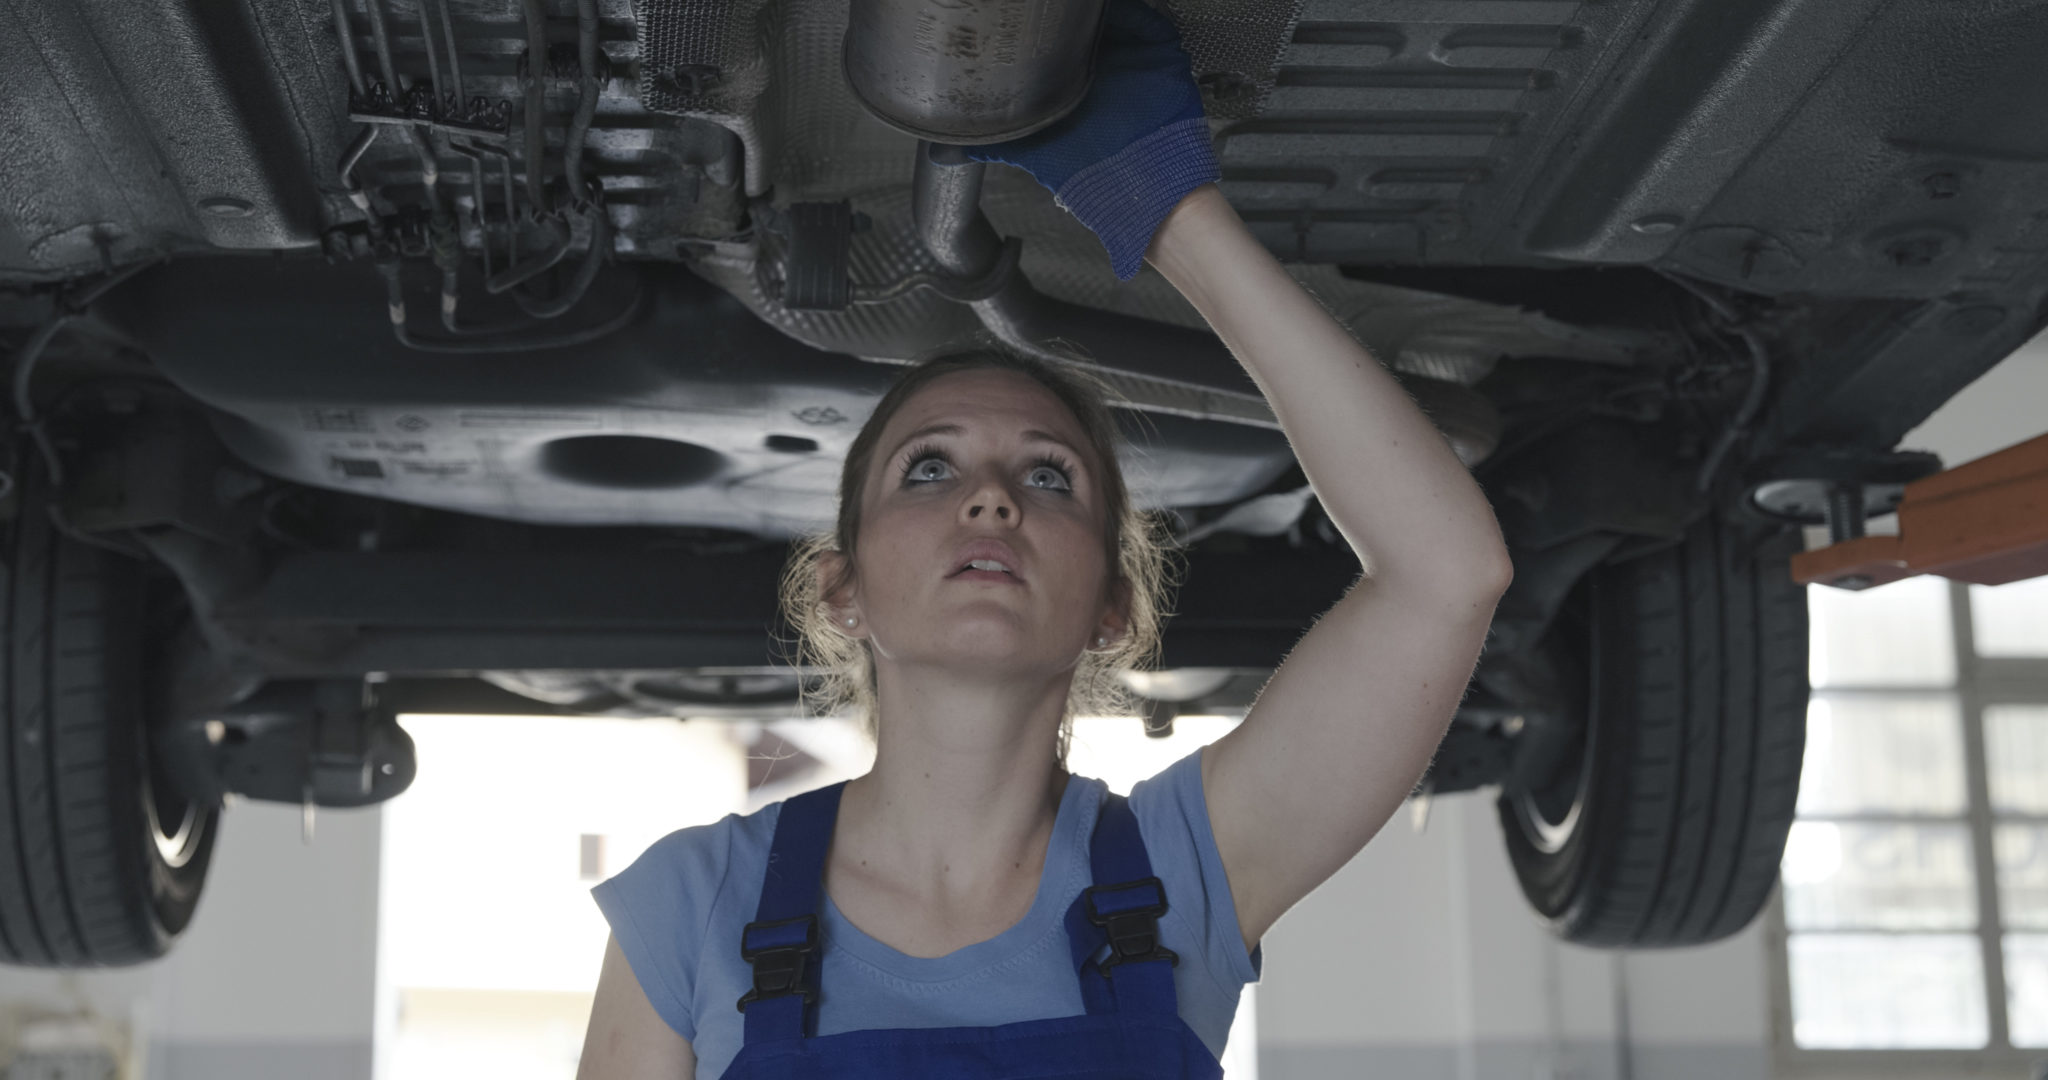 https://autolab.com.co/wp-content/uploads/2023/08/female-mechanic-working-under-a-car-2022-01-19-00-21-40-utc-scaled.jpg